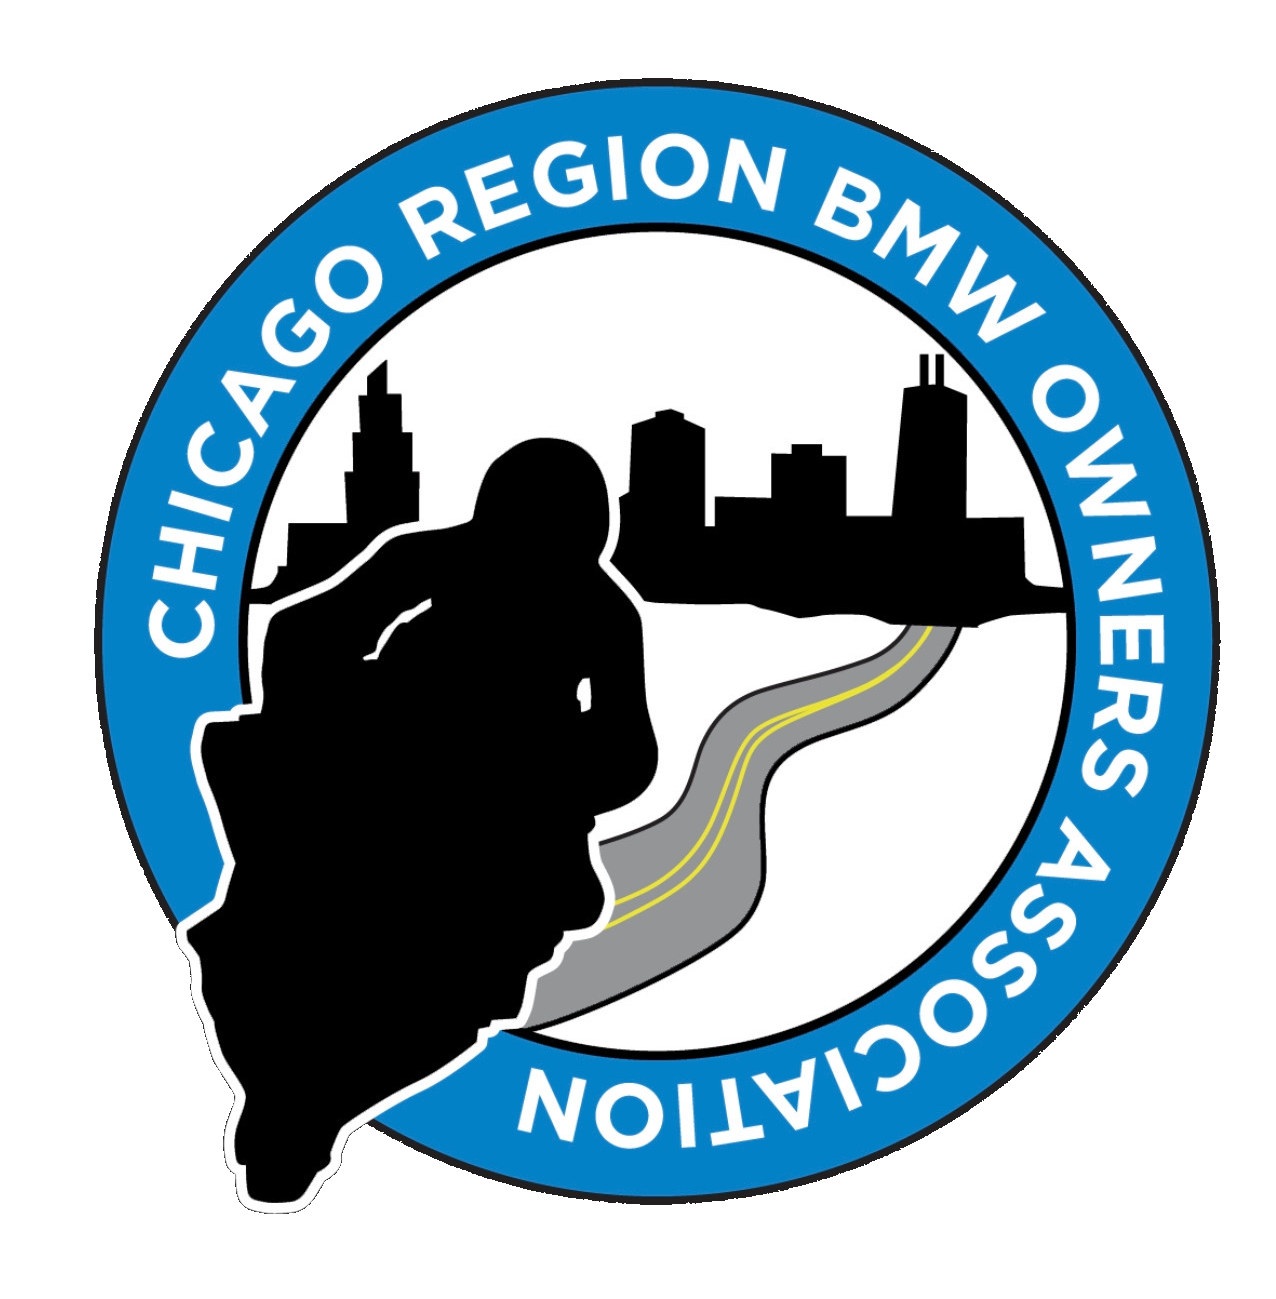 Chicago Region BMW Owners Association